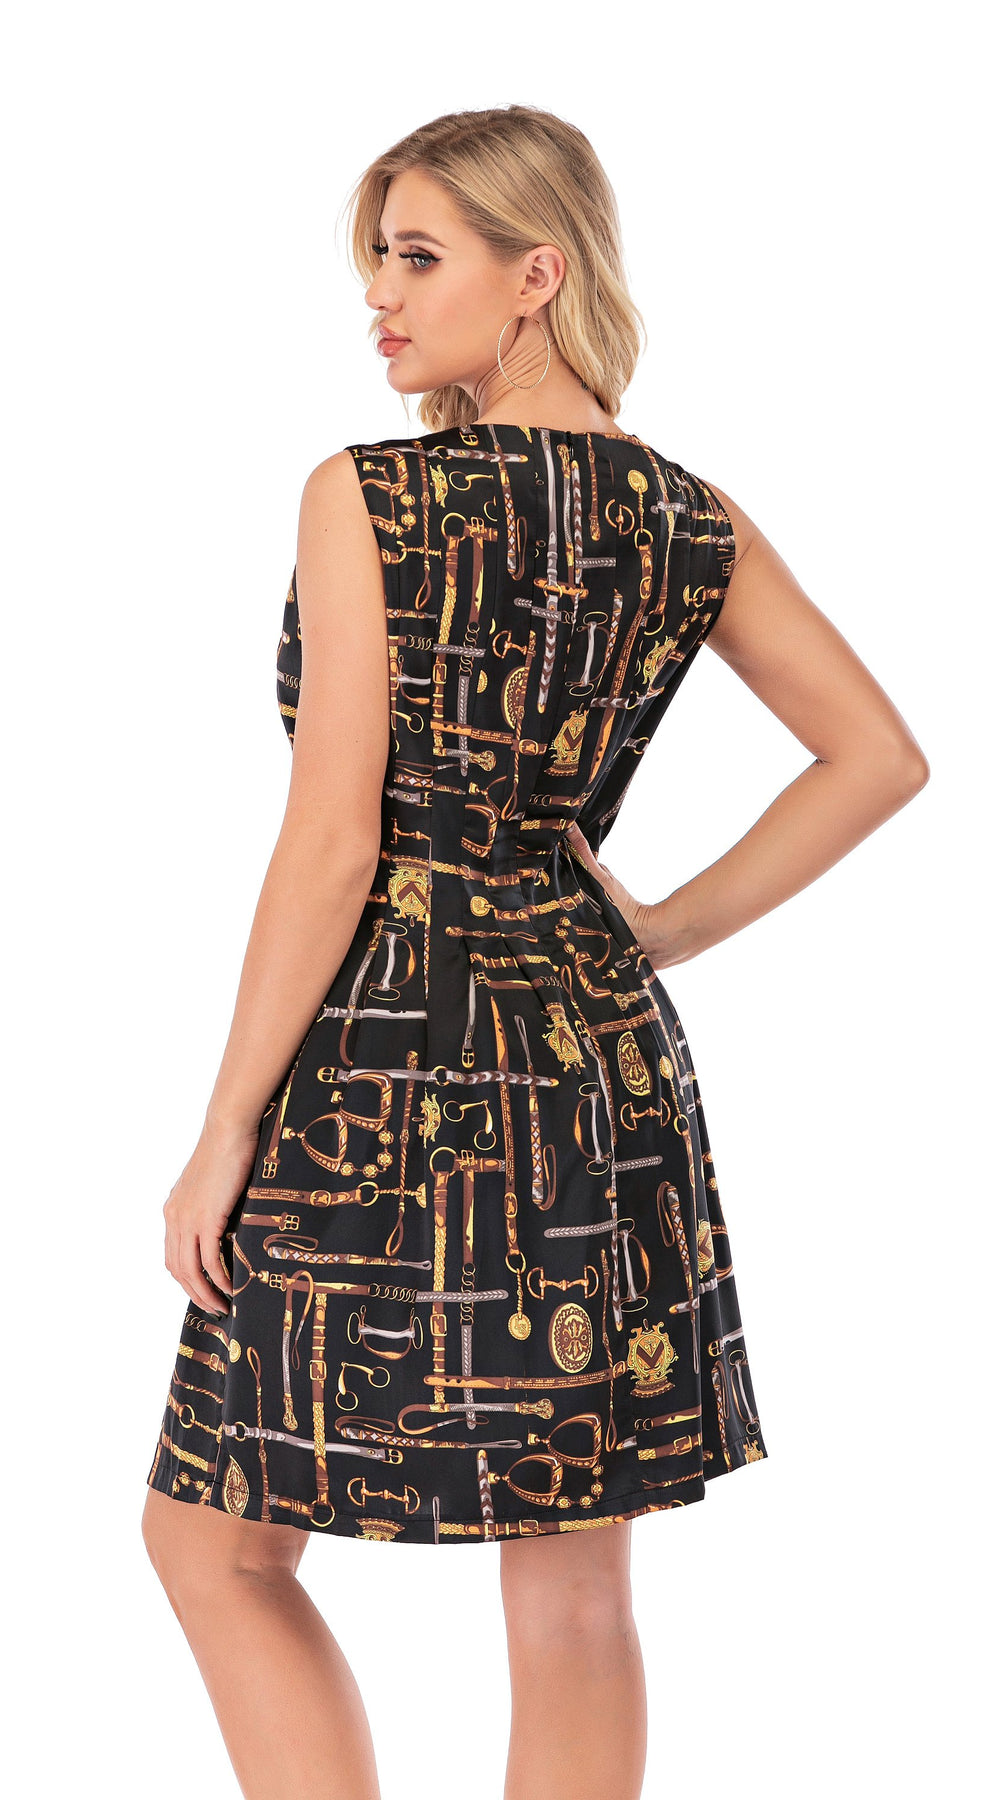 calison women's printed slim-fit fashion sleeveless sun dress